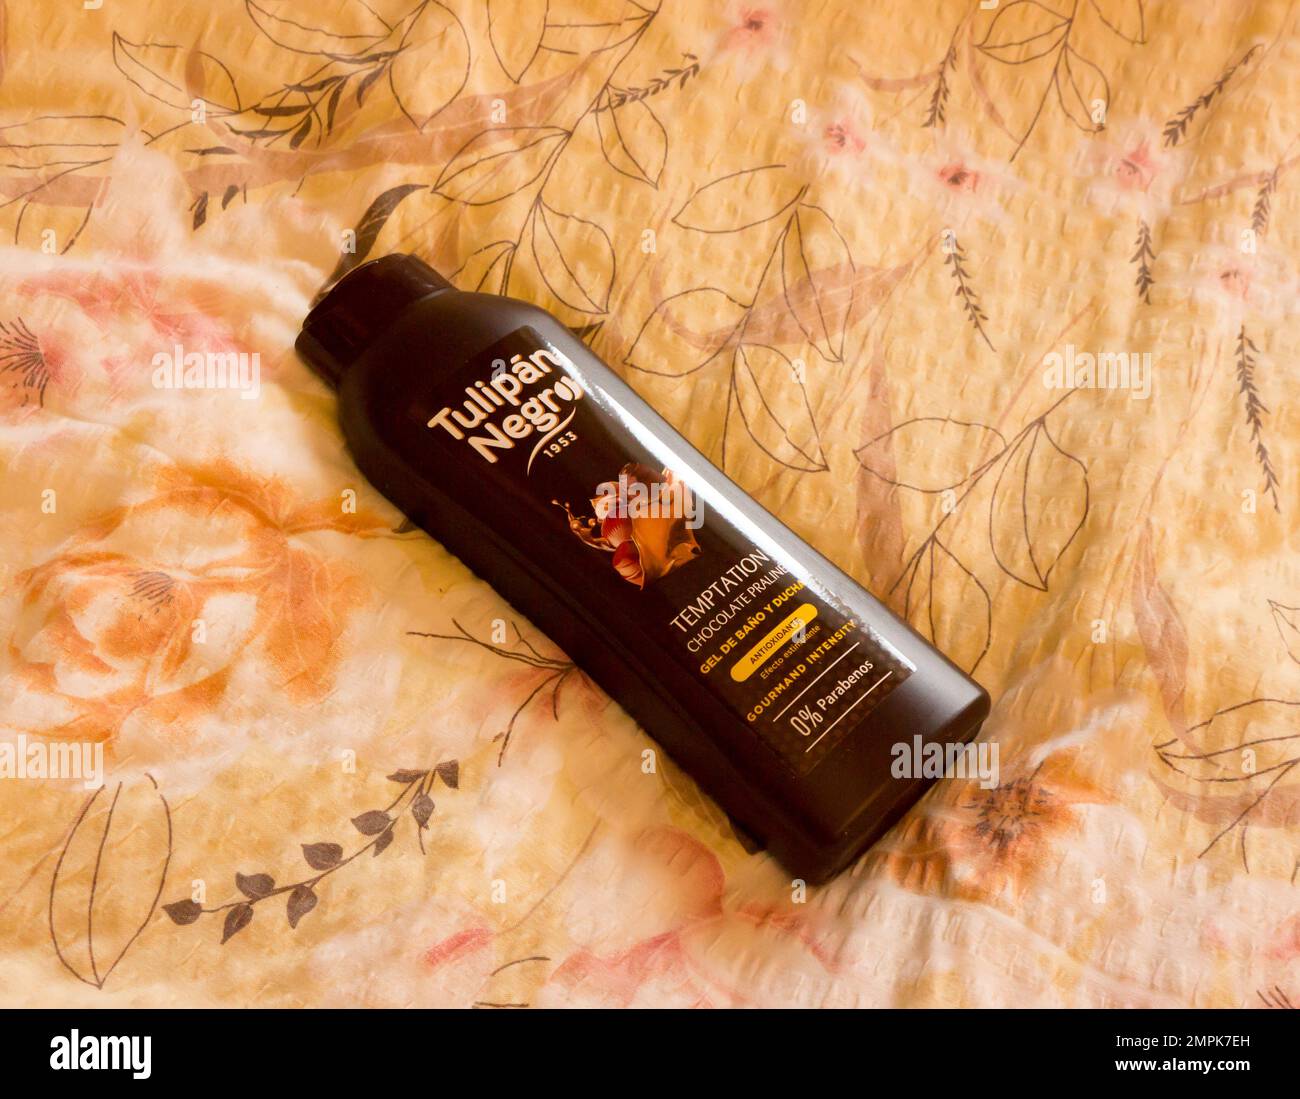 Shampoo TULIPAN NEGRO. Tulipan Negro Original shower gel is a true Spanish  fragrance Stock Photo - Alamy